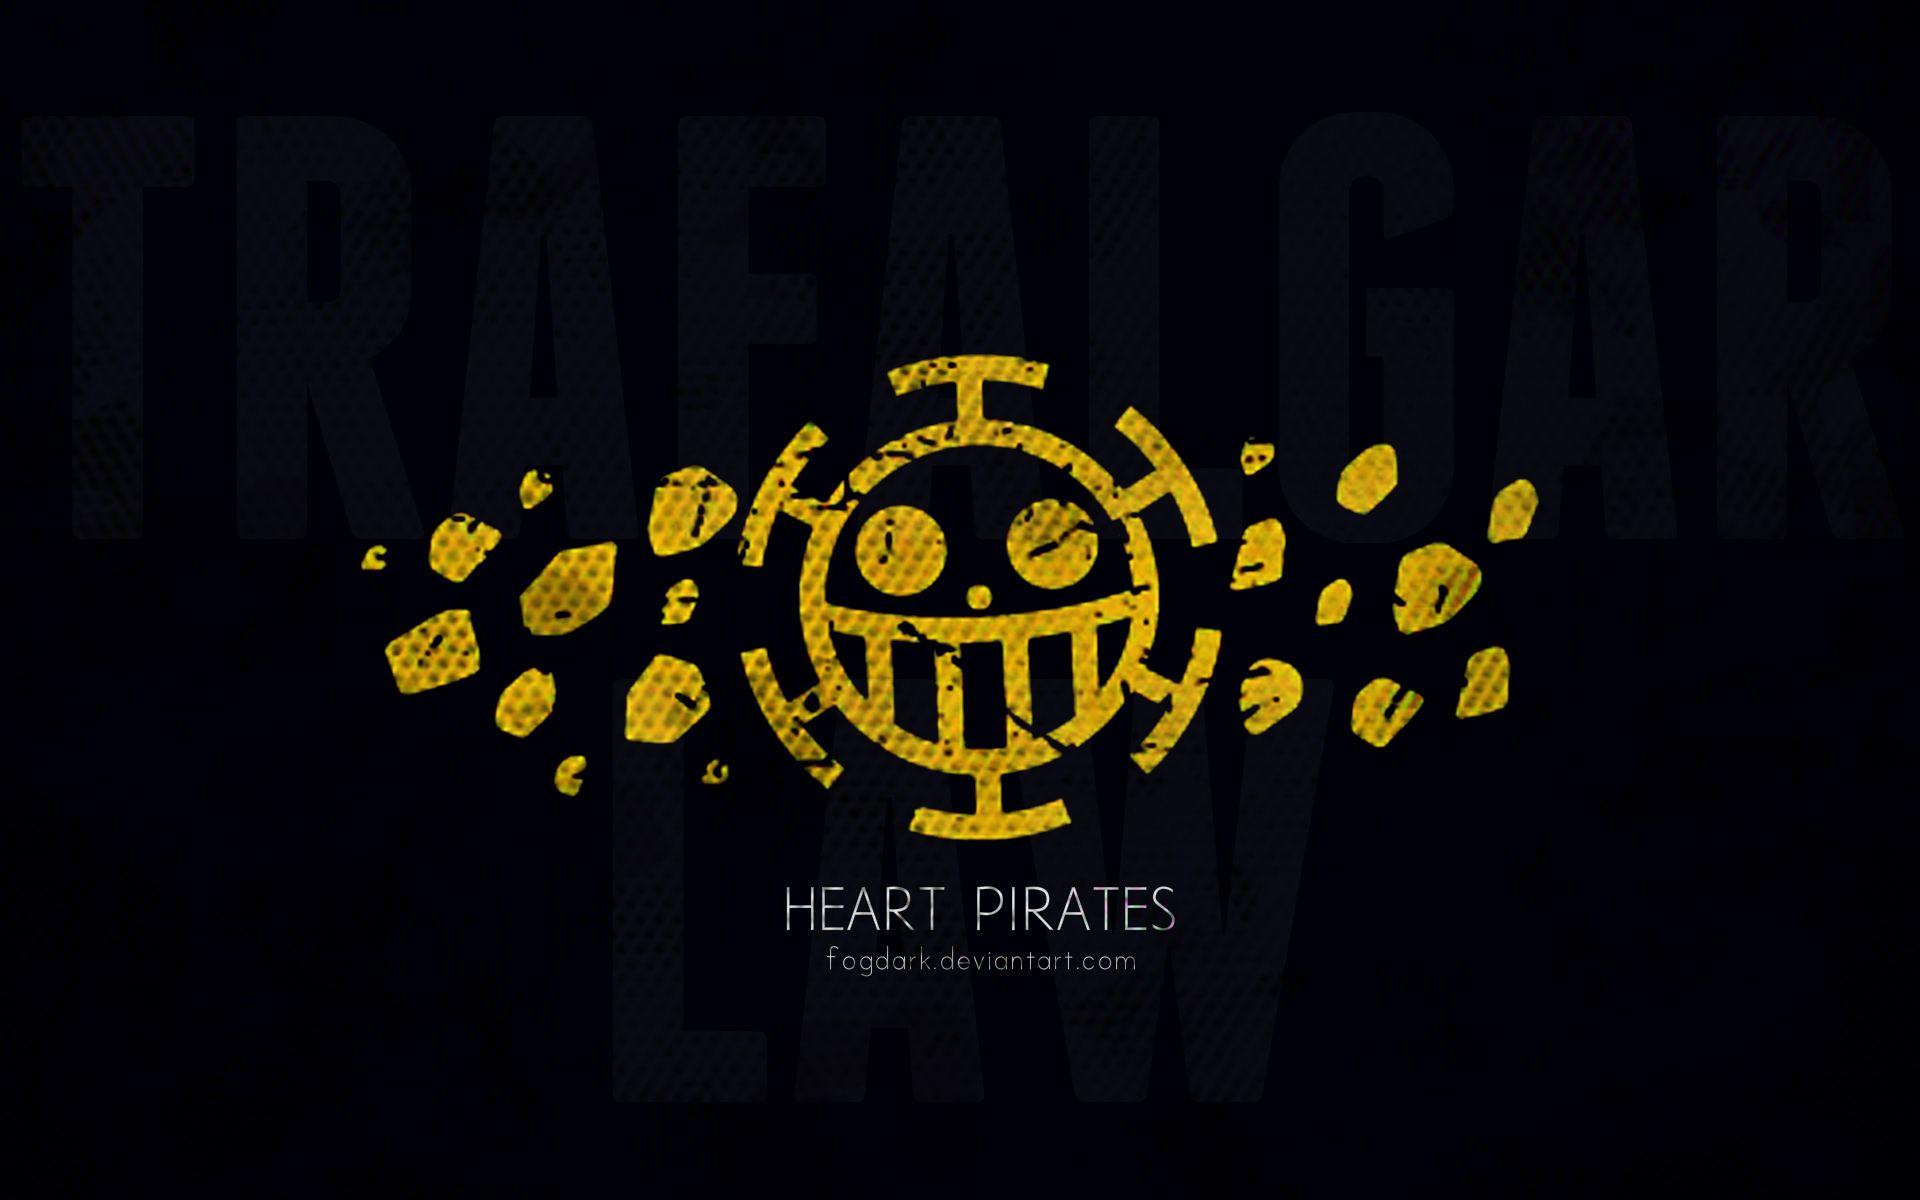 Minimalistic Heart Pirates One Piece Wallpaper By Fogdark